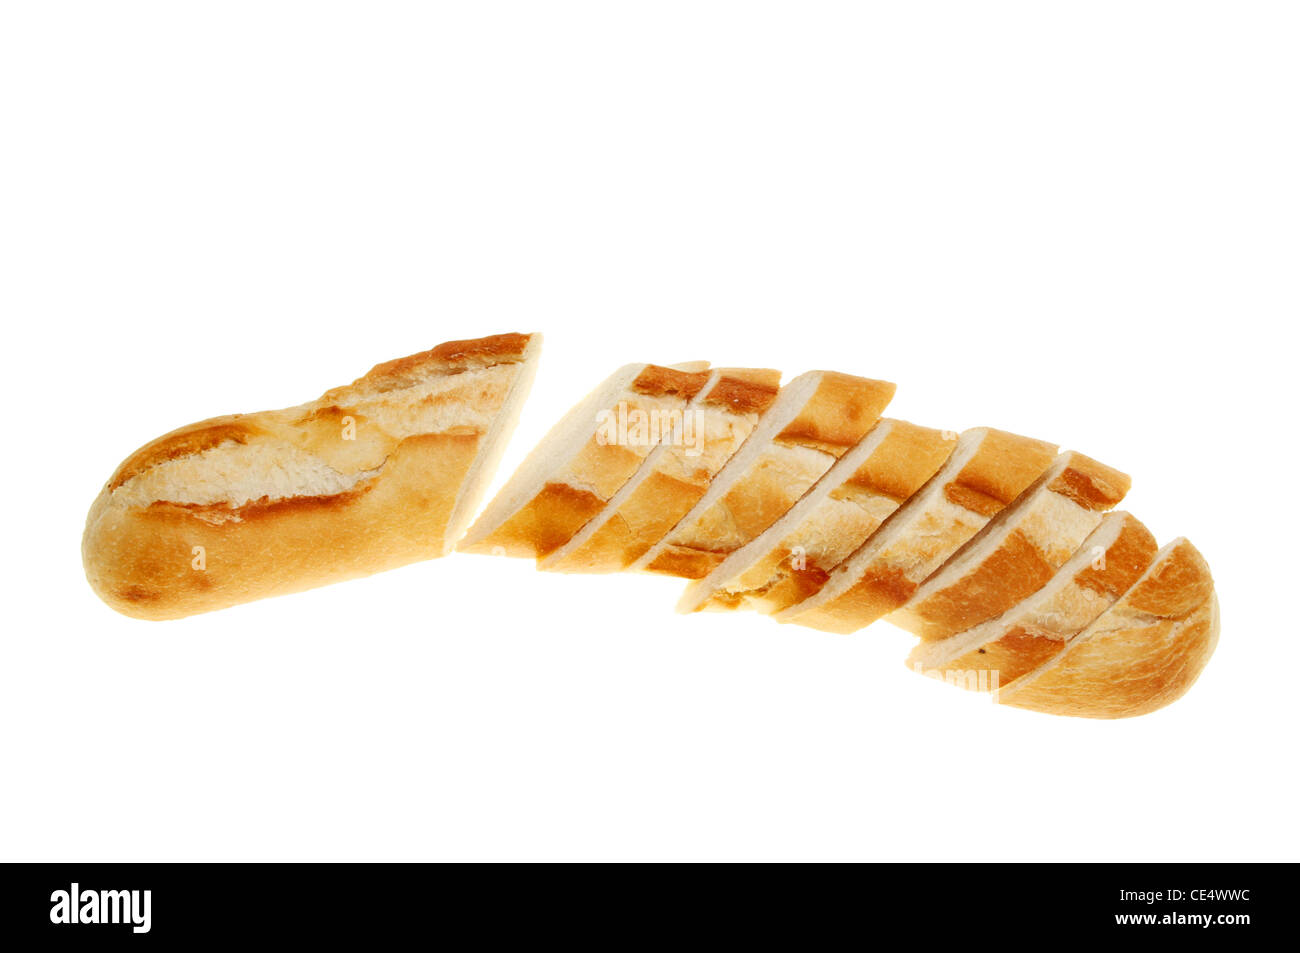 Rodajas de pan de baguette pan aislado en blanco Foto de stock